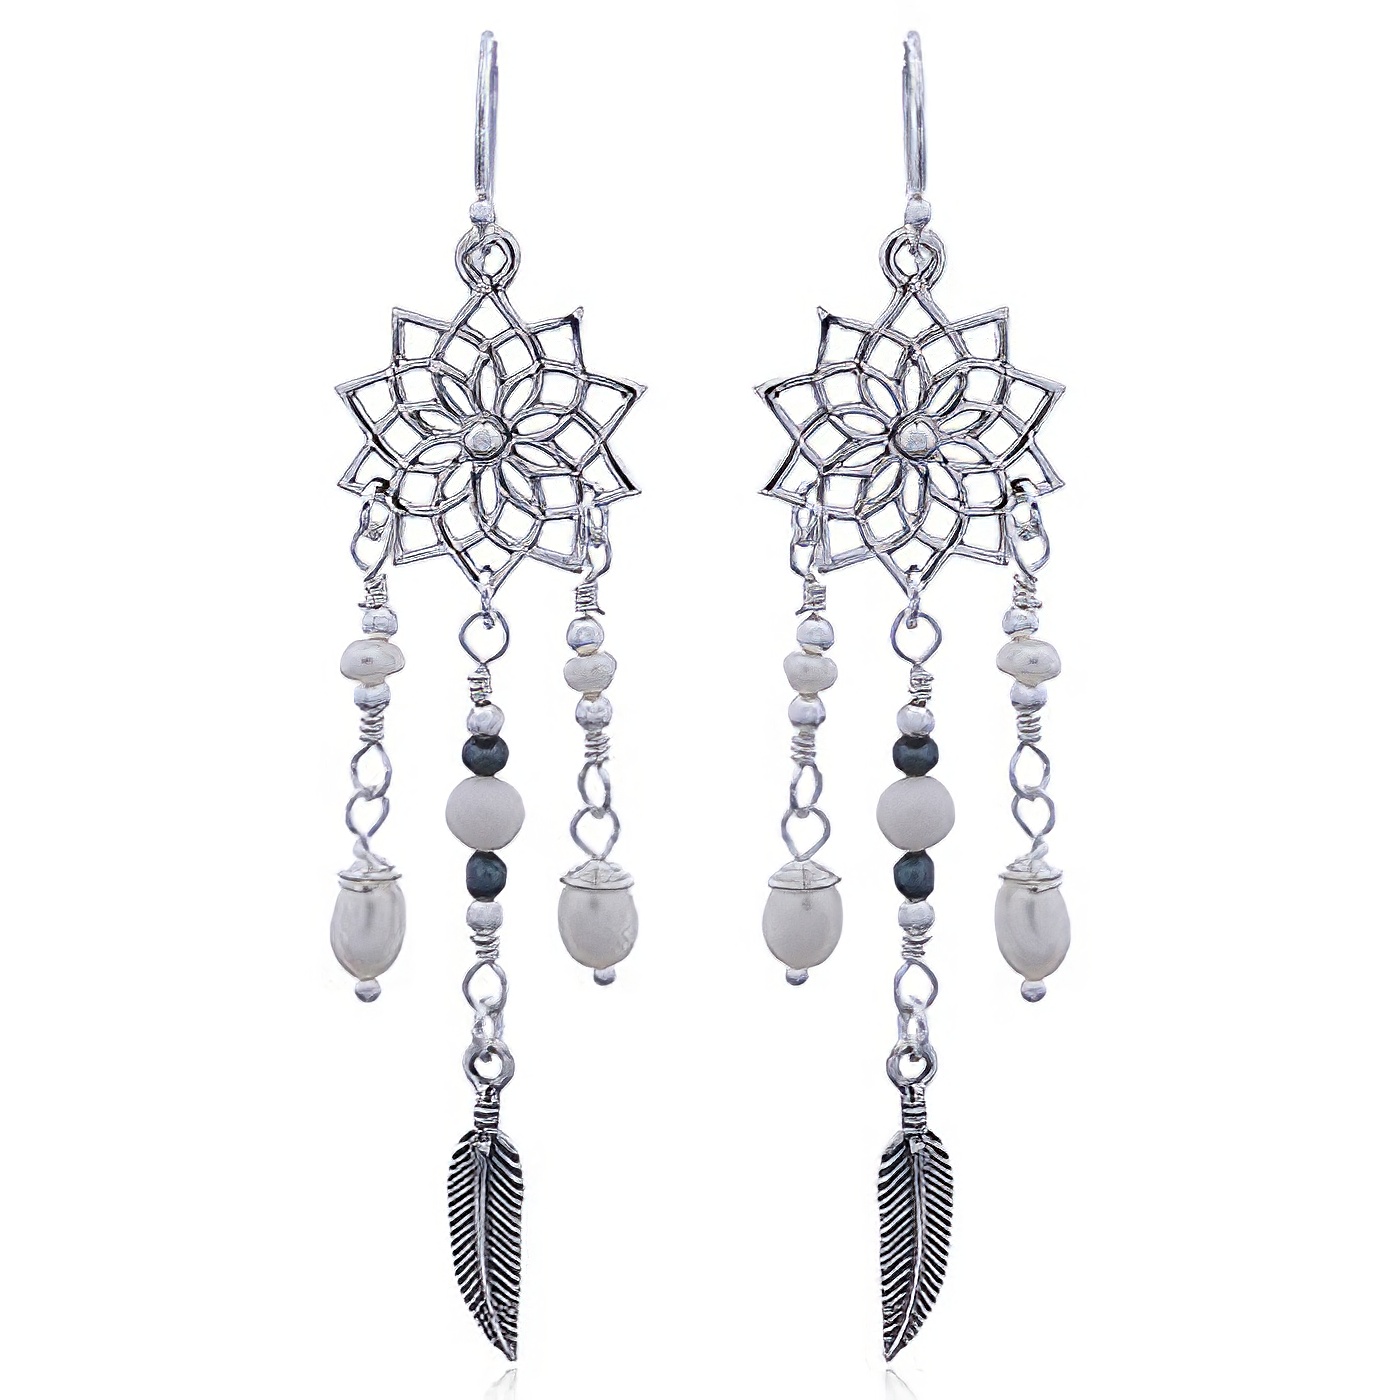 Silver Lotus Flower Earrings with Freshwater Pearls by BeYindi 